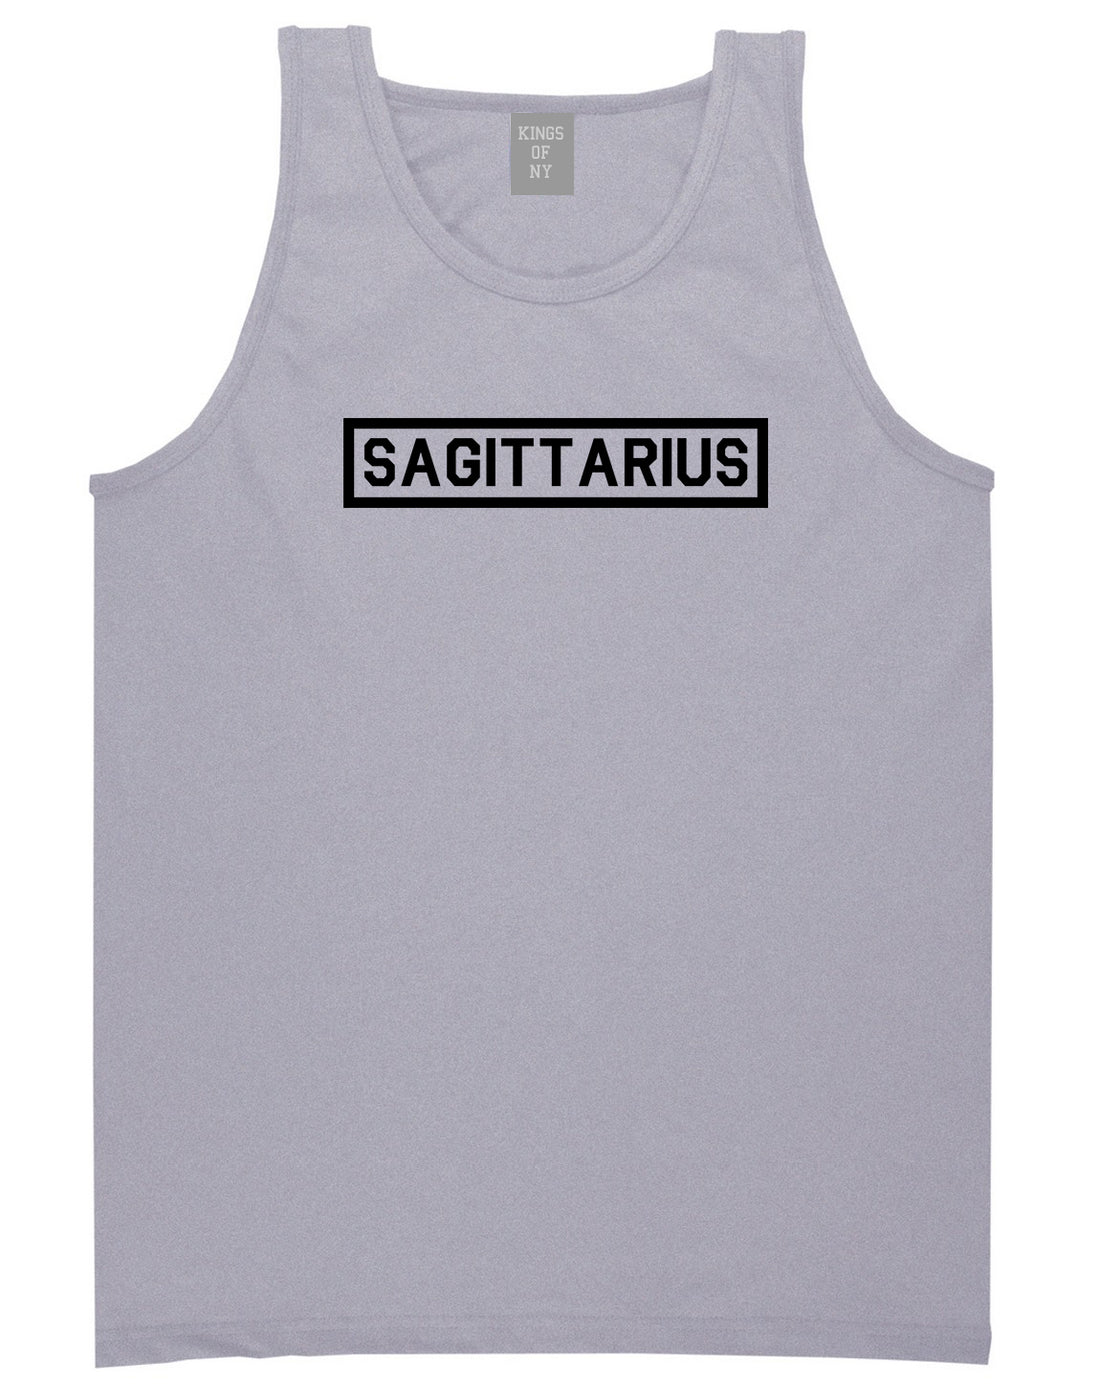 Sagittarius Horoscope Sign Mens Grey Tank Top Shirt by KINGS OF NY